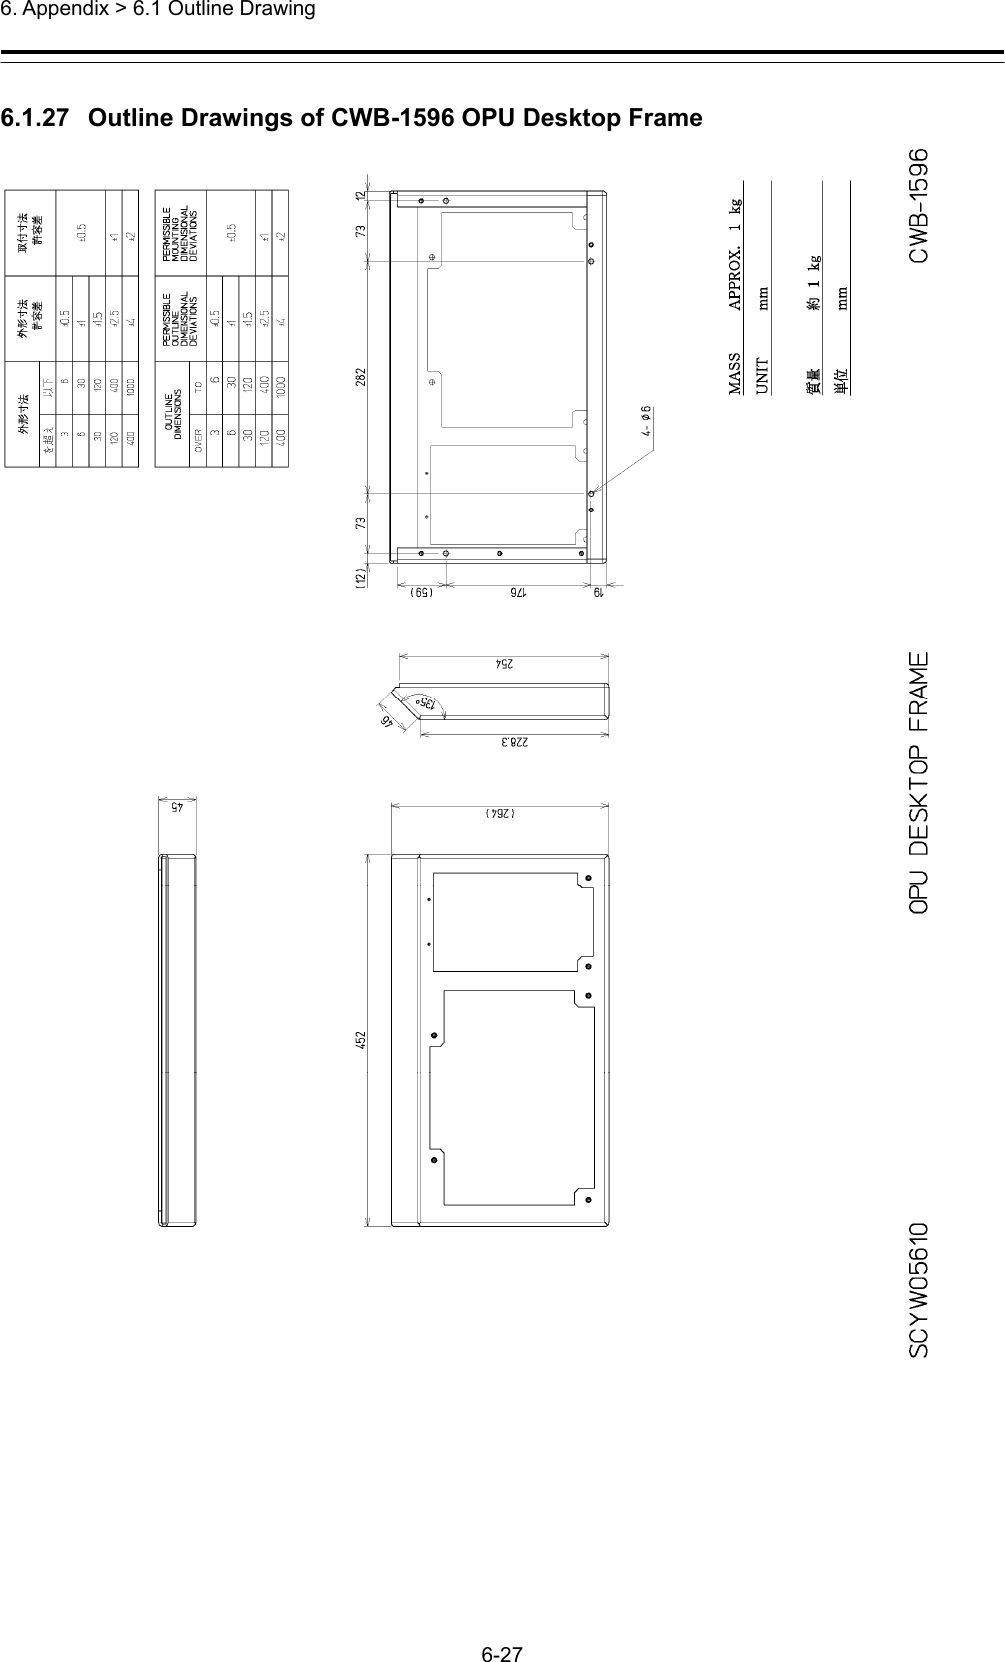  6. Appendix &gt; 6.1 Outline Drawing 6-27  6.1.27   Outline Drawings of CWB-1596 OPU Desktop Frame  